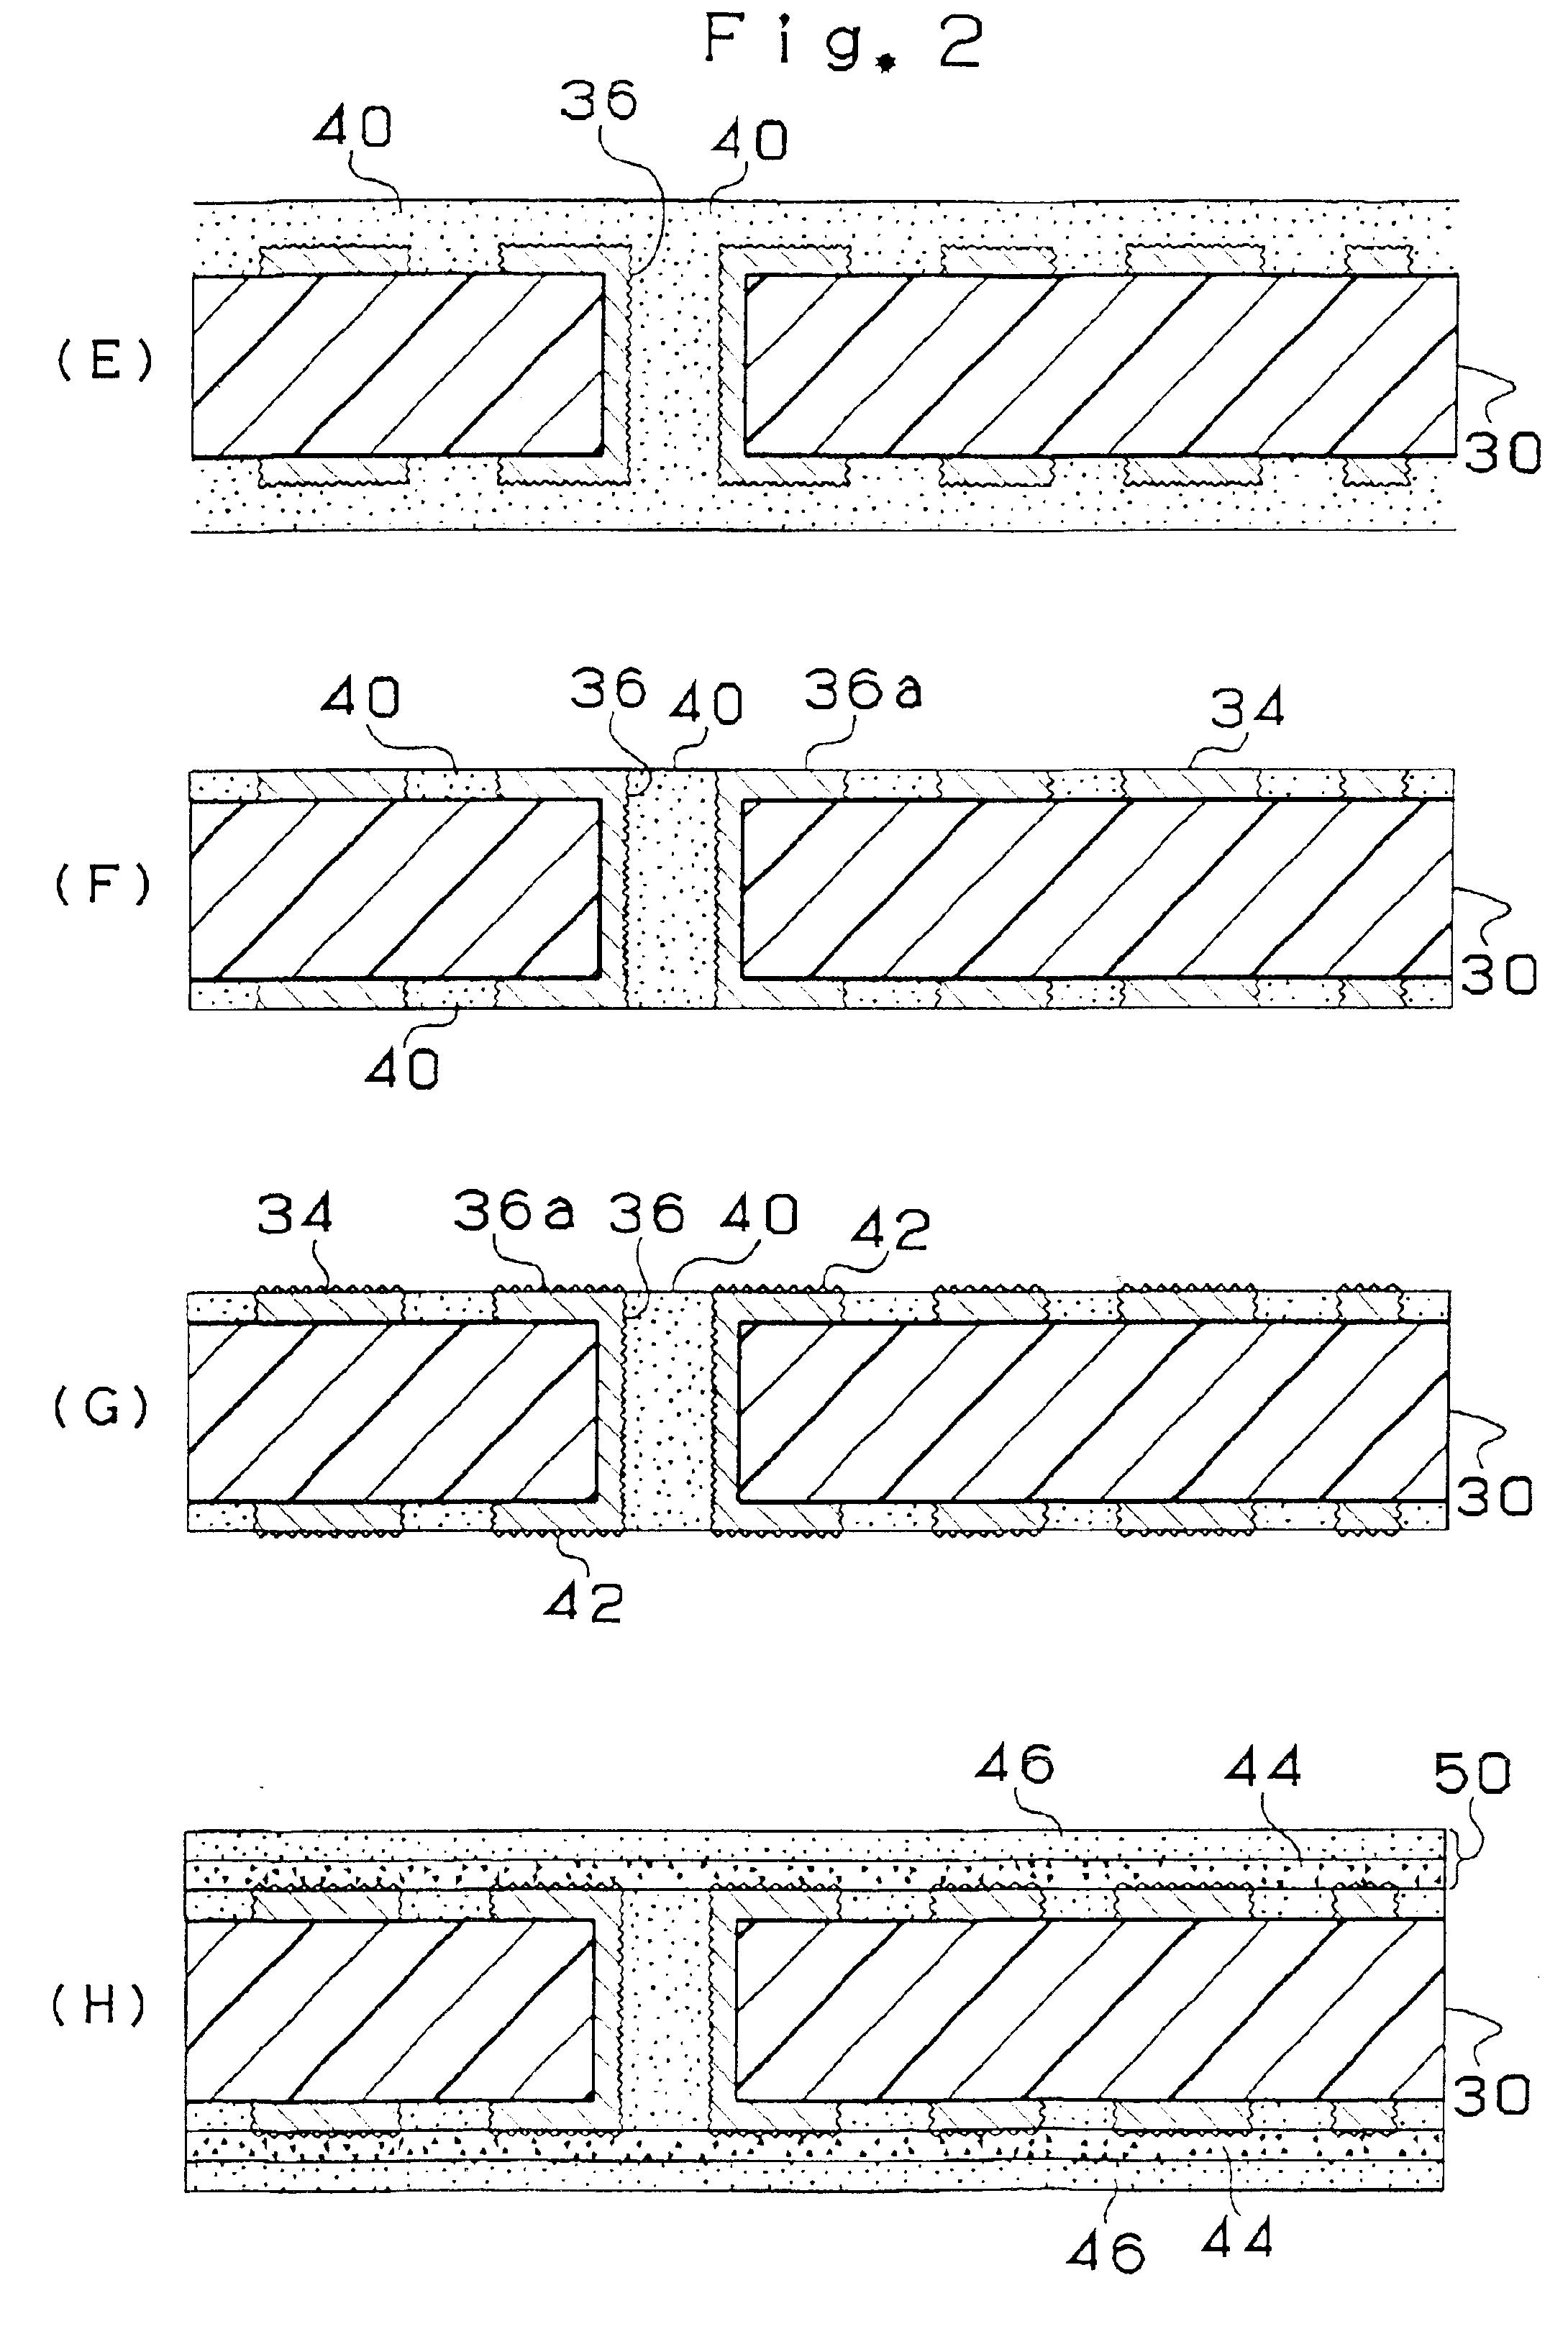 Method of fabricating crossing wiring pattern on a printed circuit board